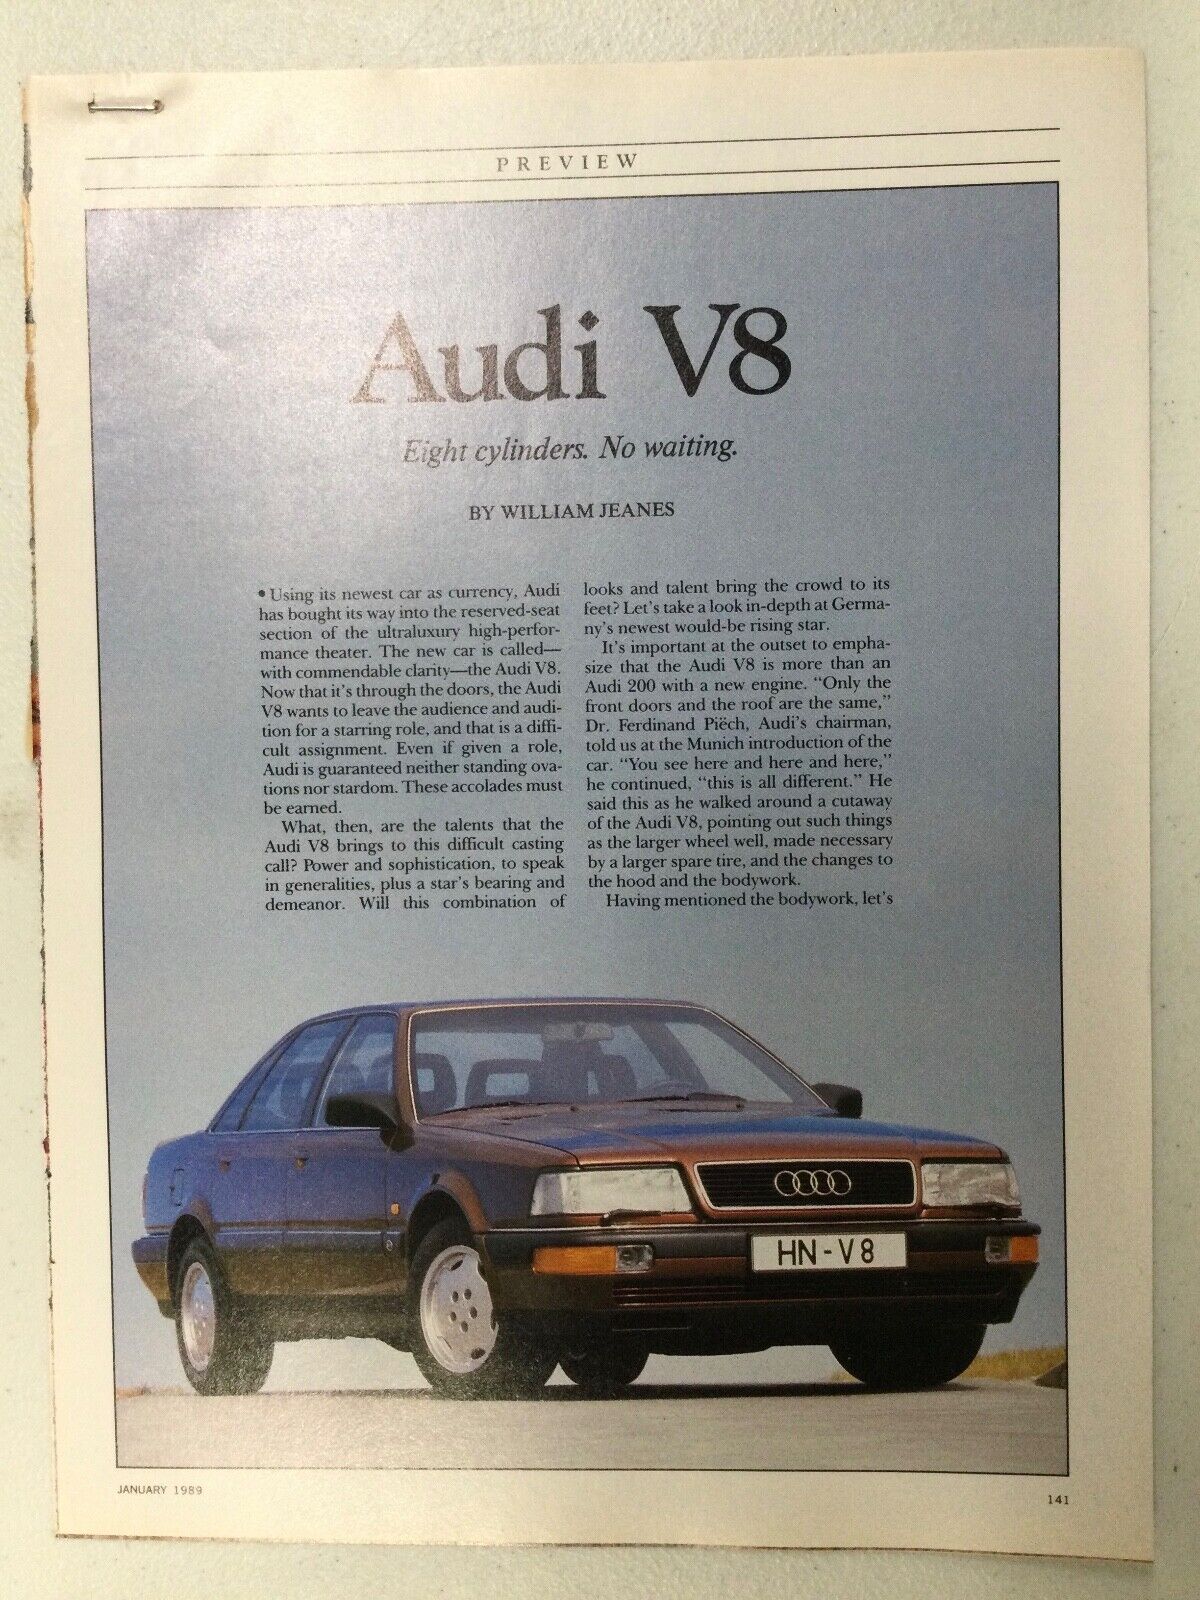 MISC2007 Vintage Article Preview 1989 Audi V8 Jan 1989 5 page